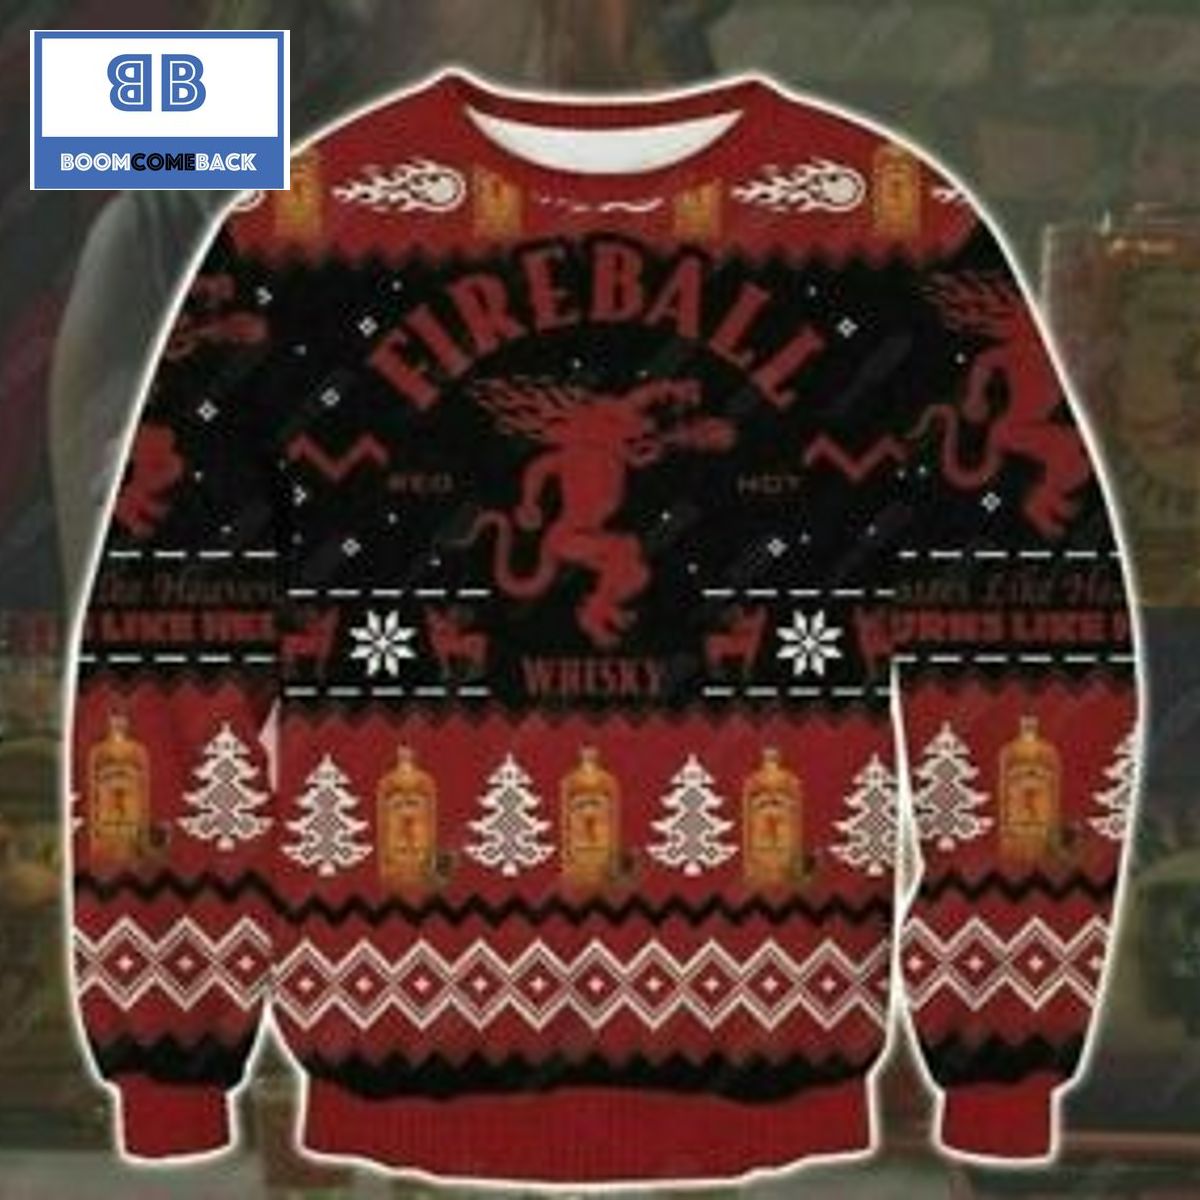 Fireball Cinnamon Whisky Christmas 3D Sweater